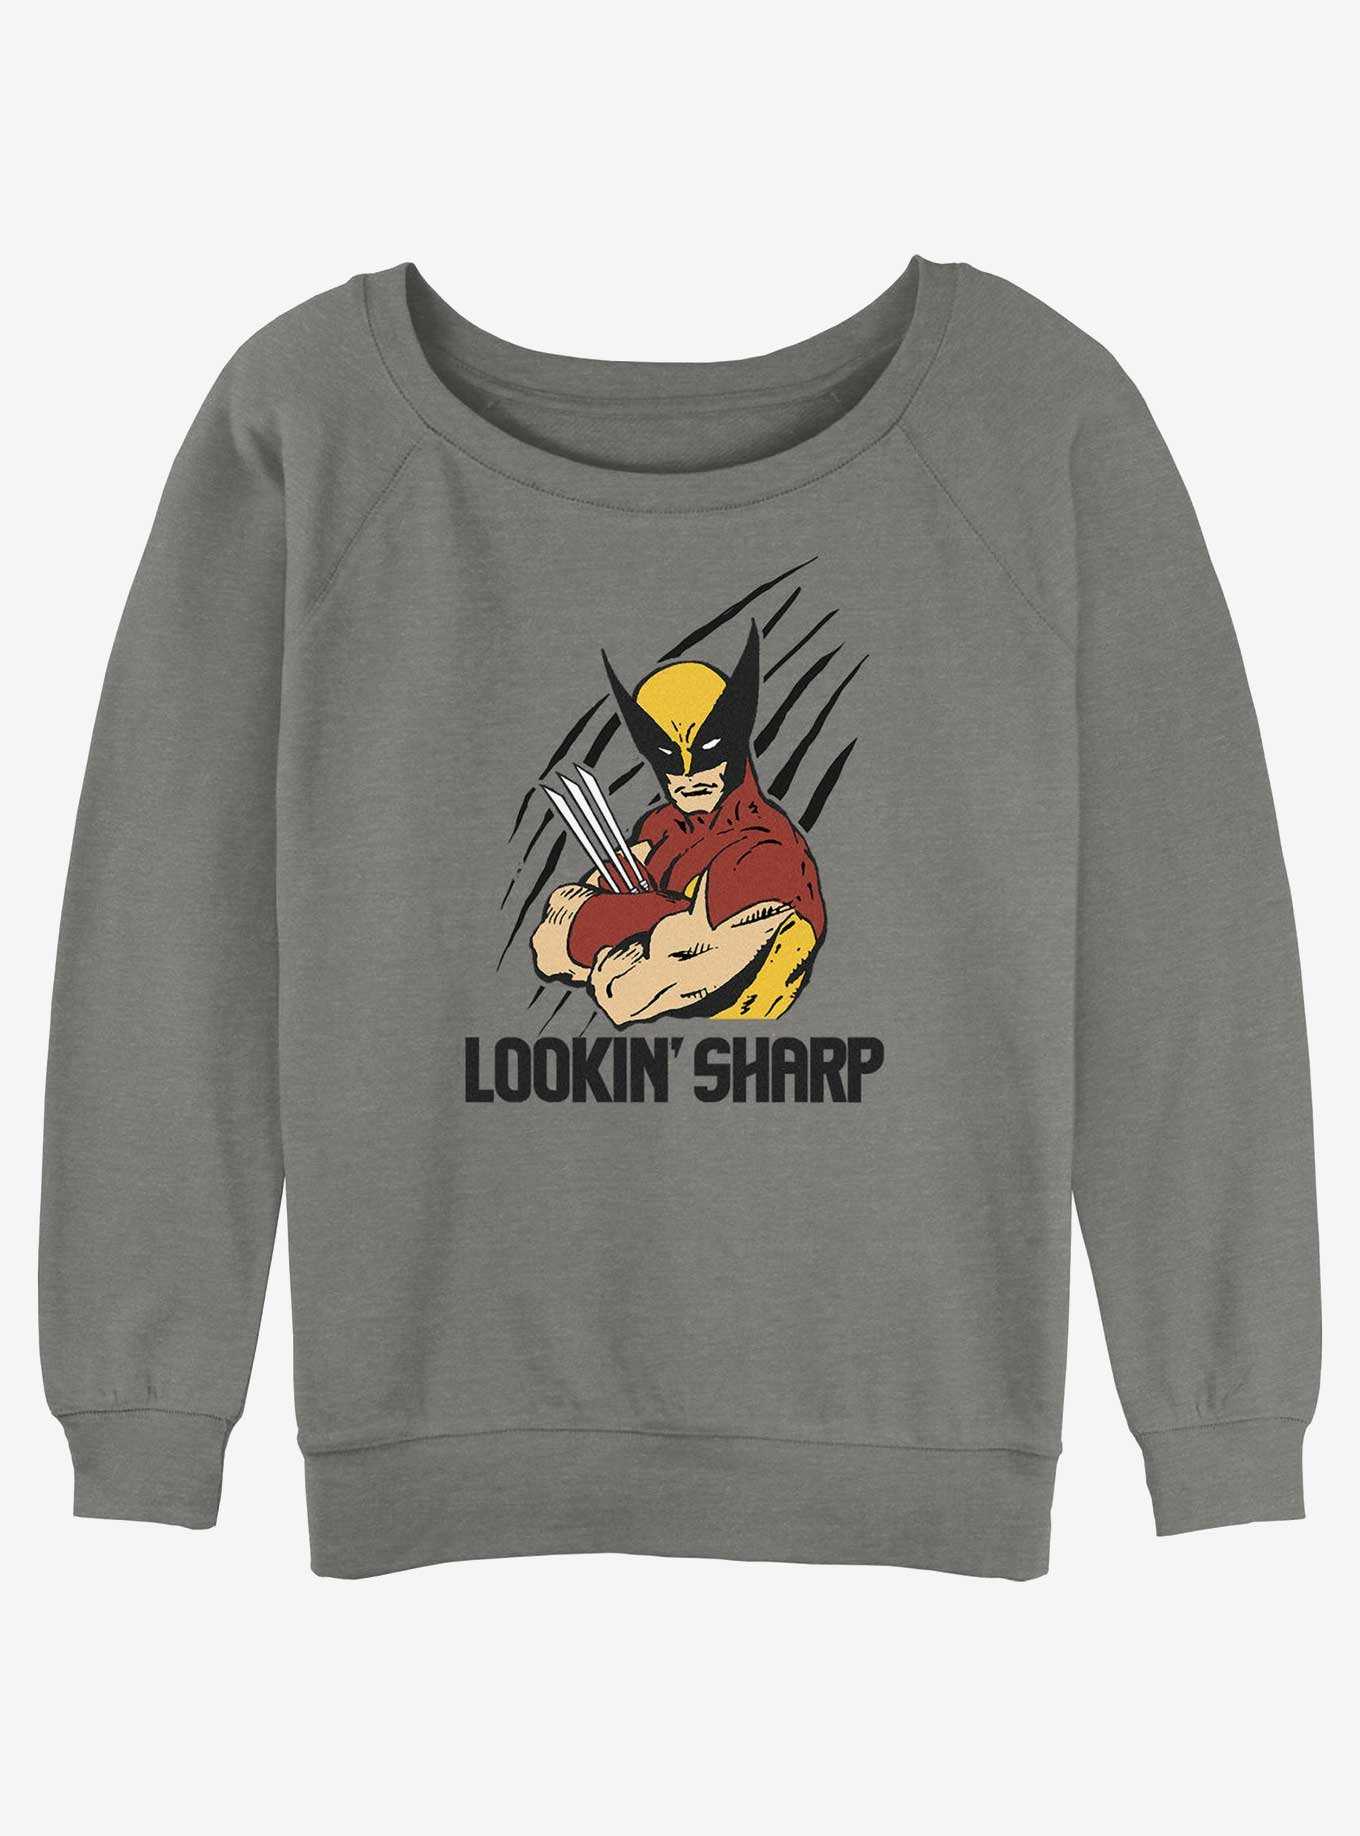 Wolverine Lookin' Sharp Girls Slouchy Sweatshirt, , hi-res